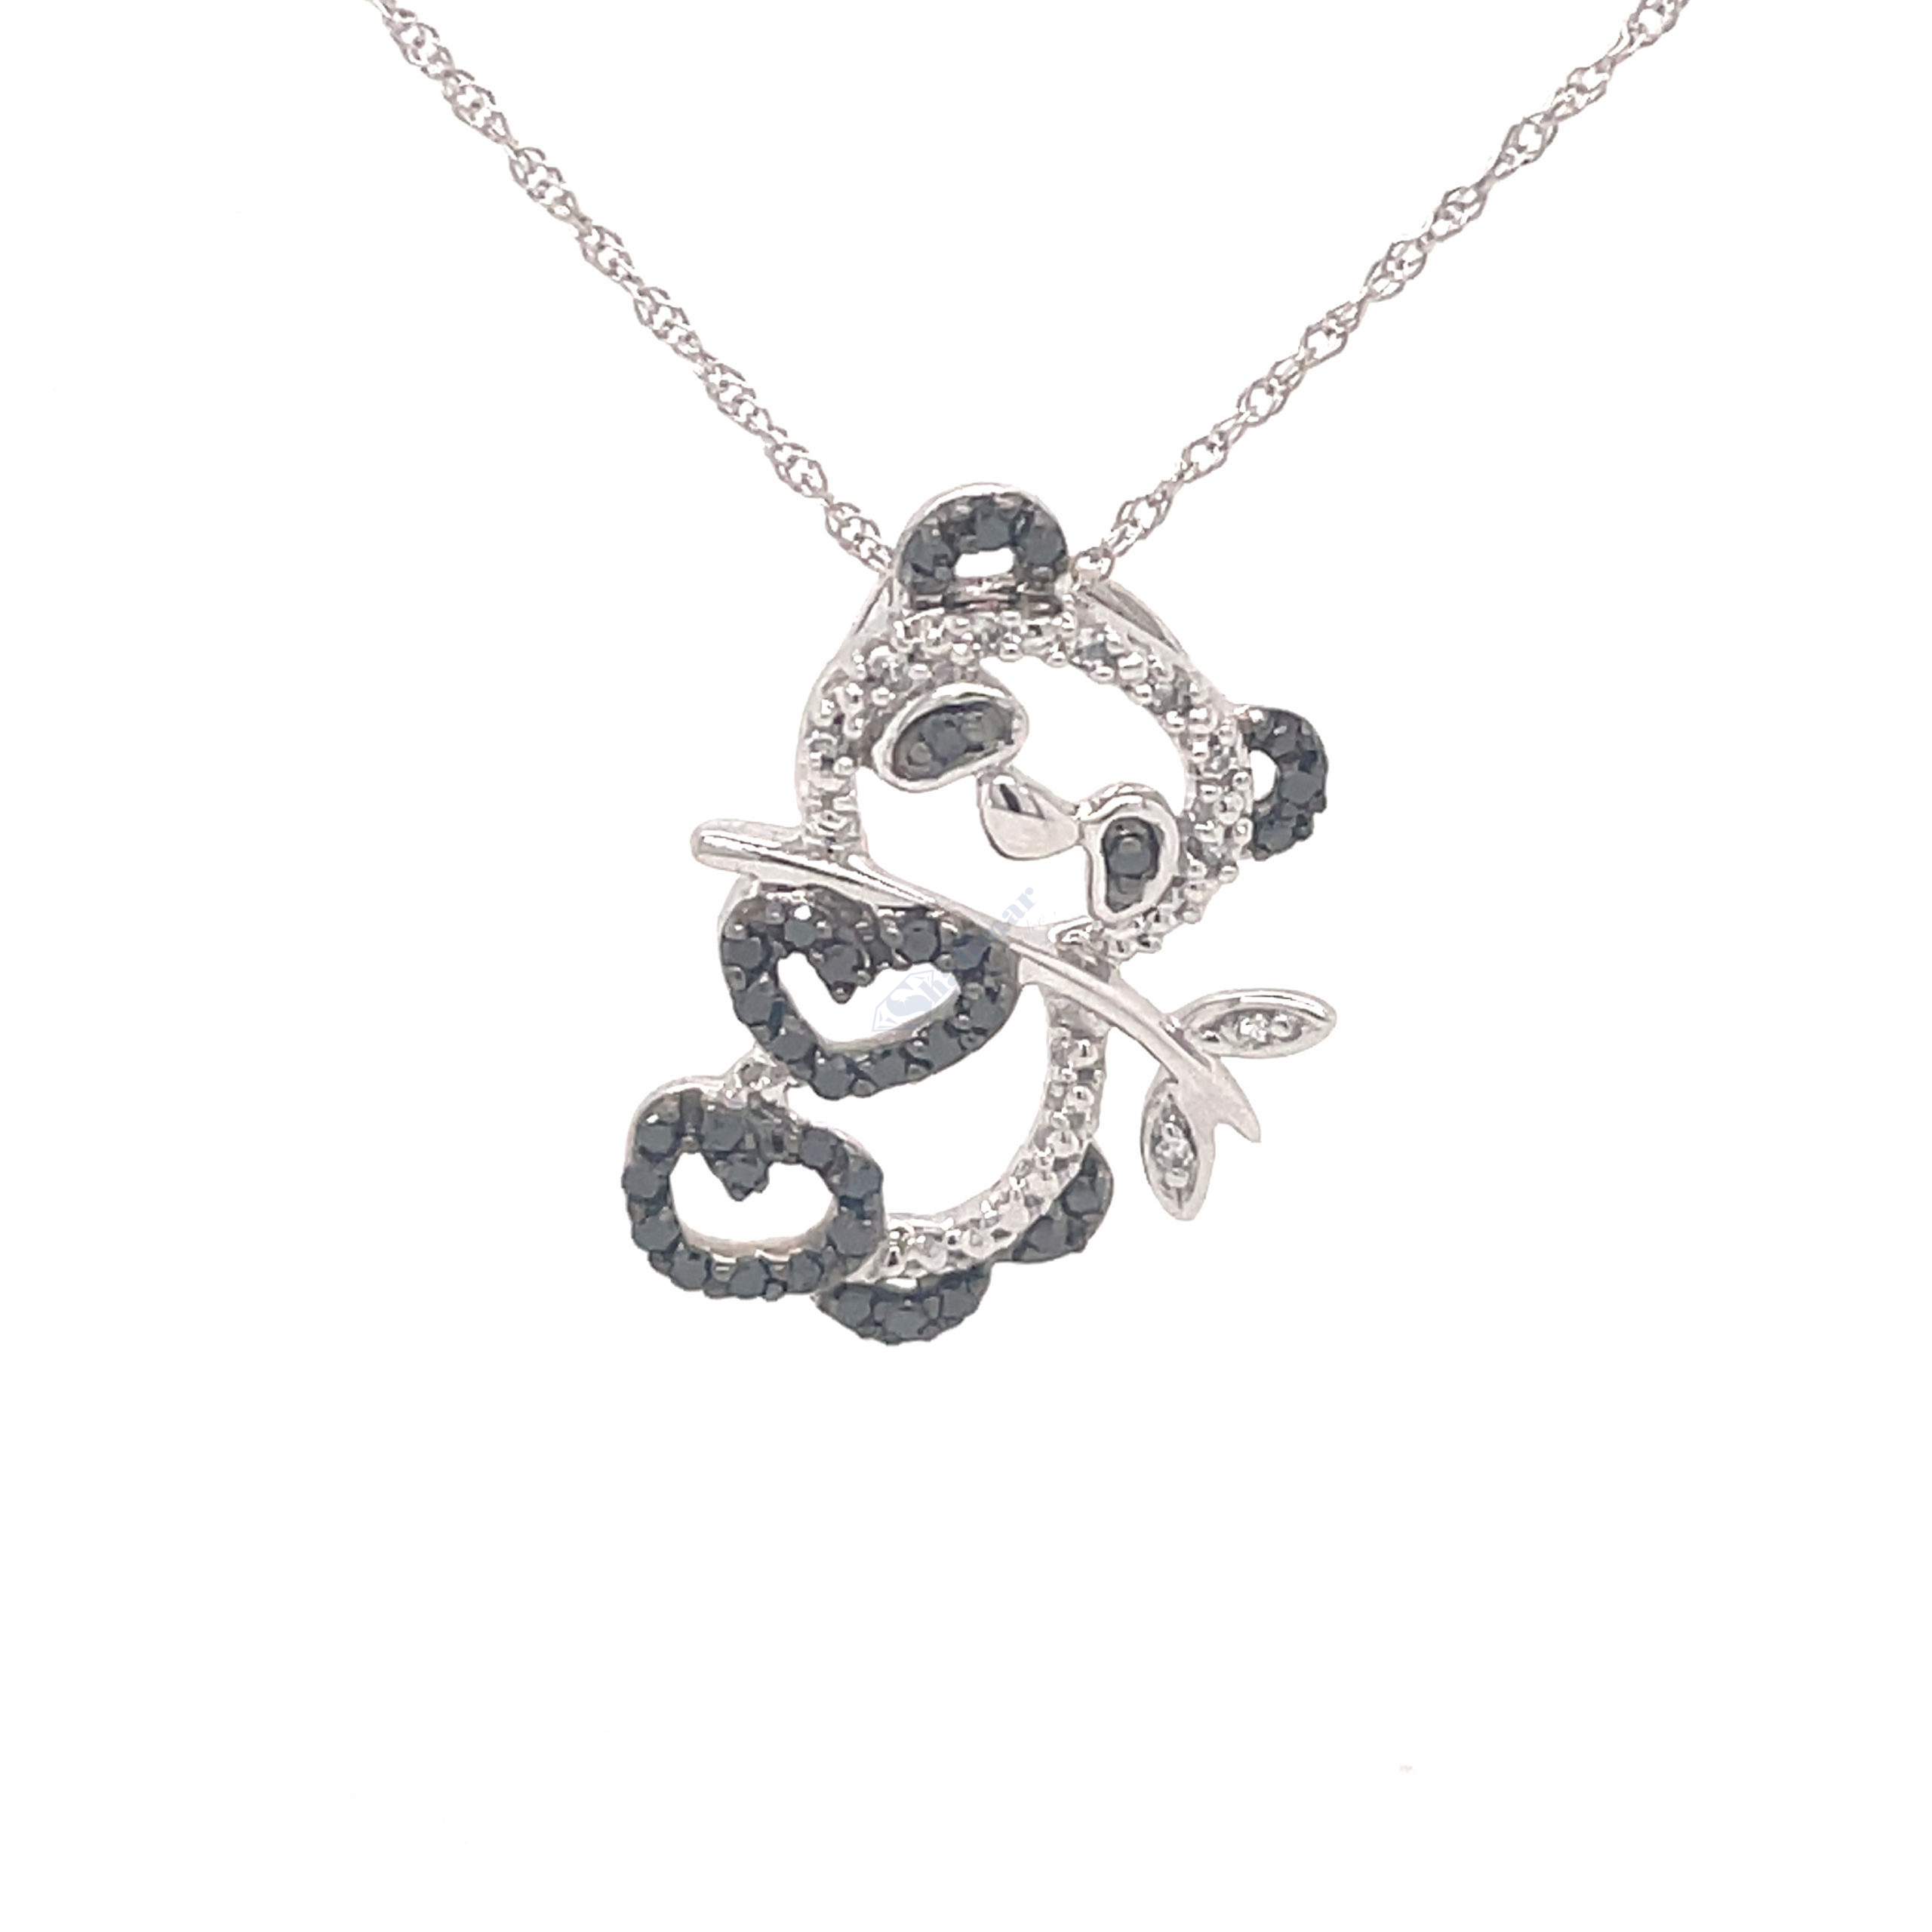 Black & White Diamond Panda Pendant Necklace 18K White Gold